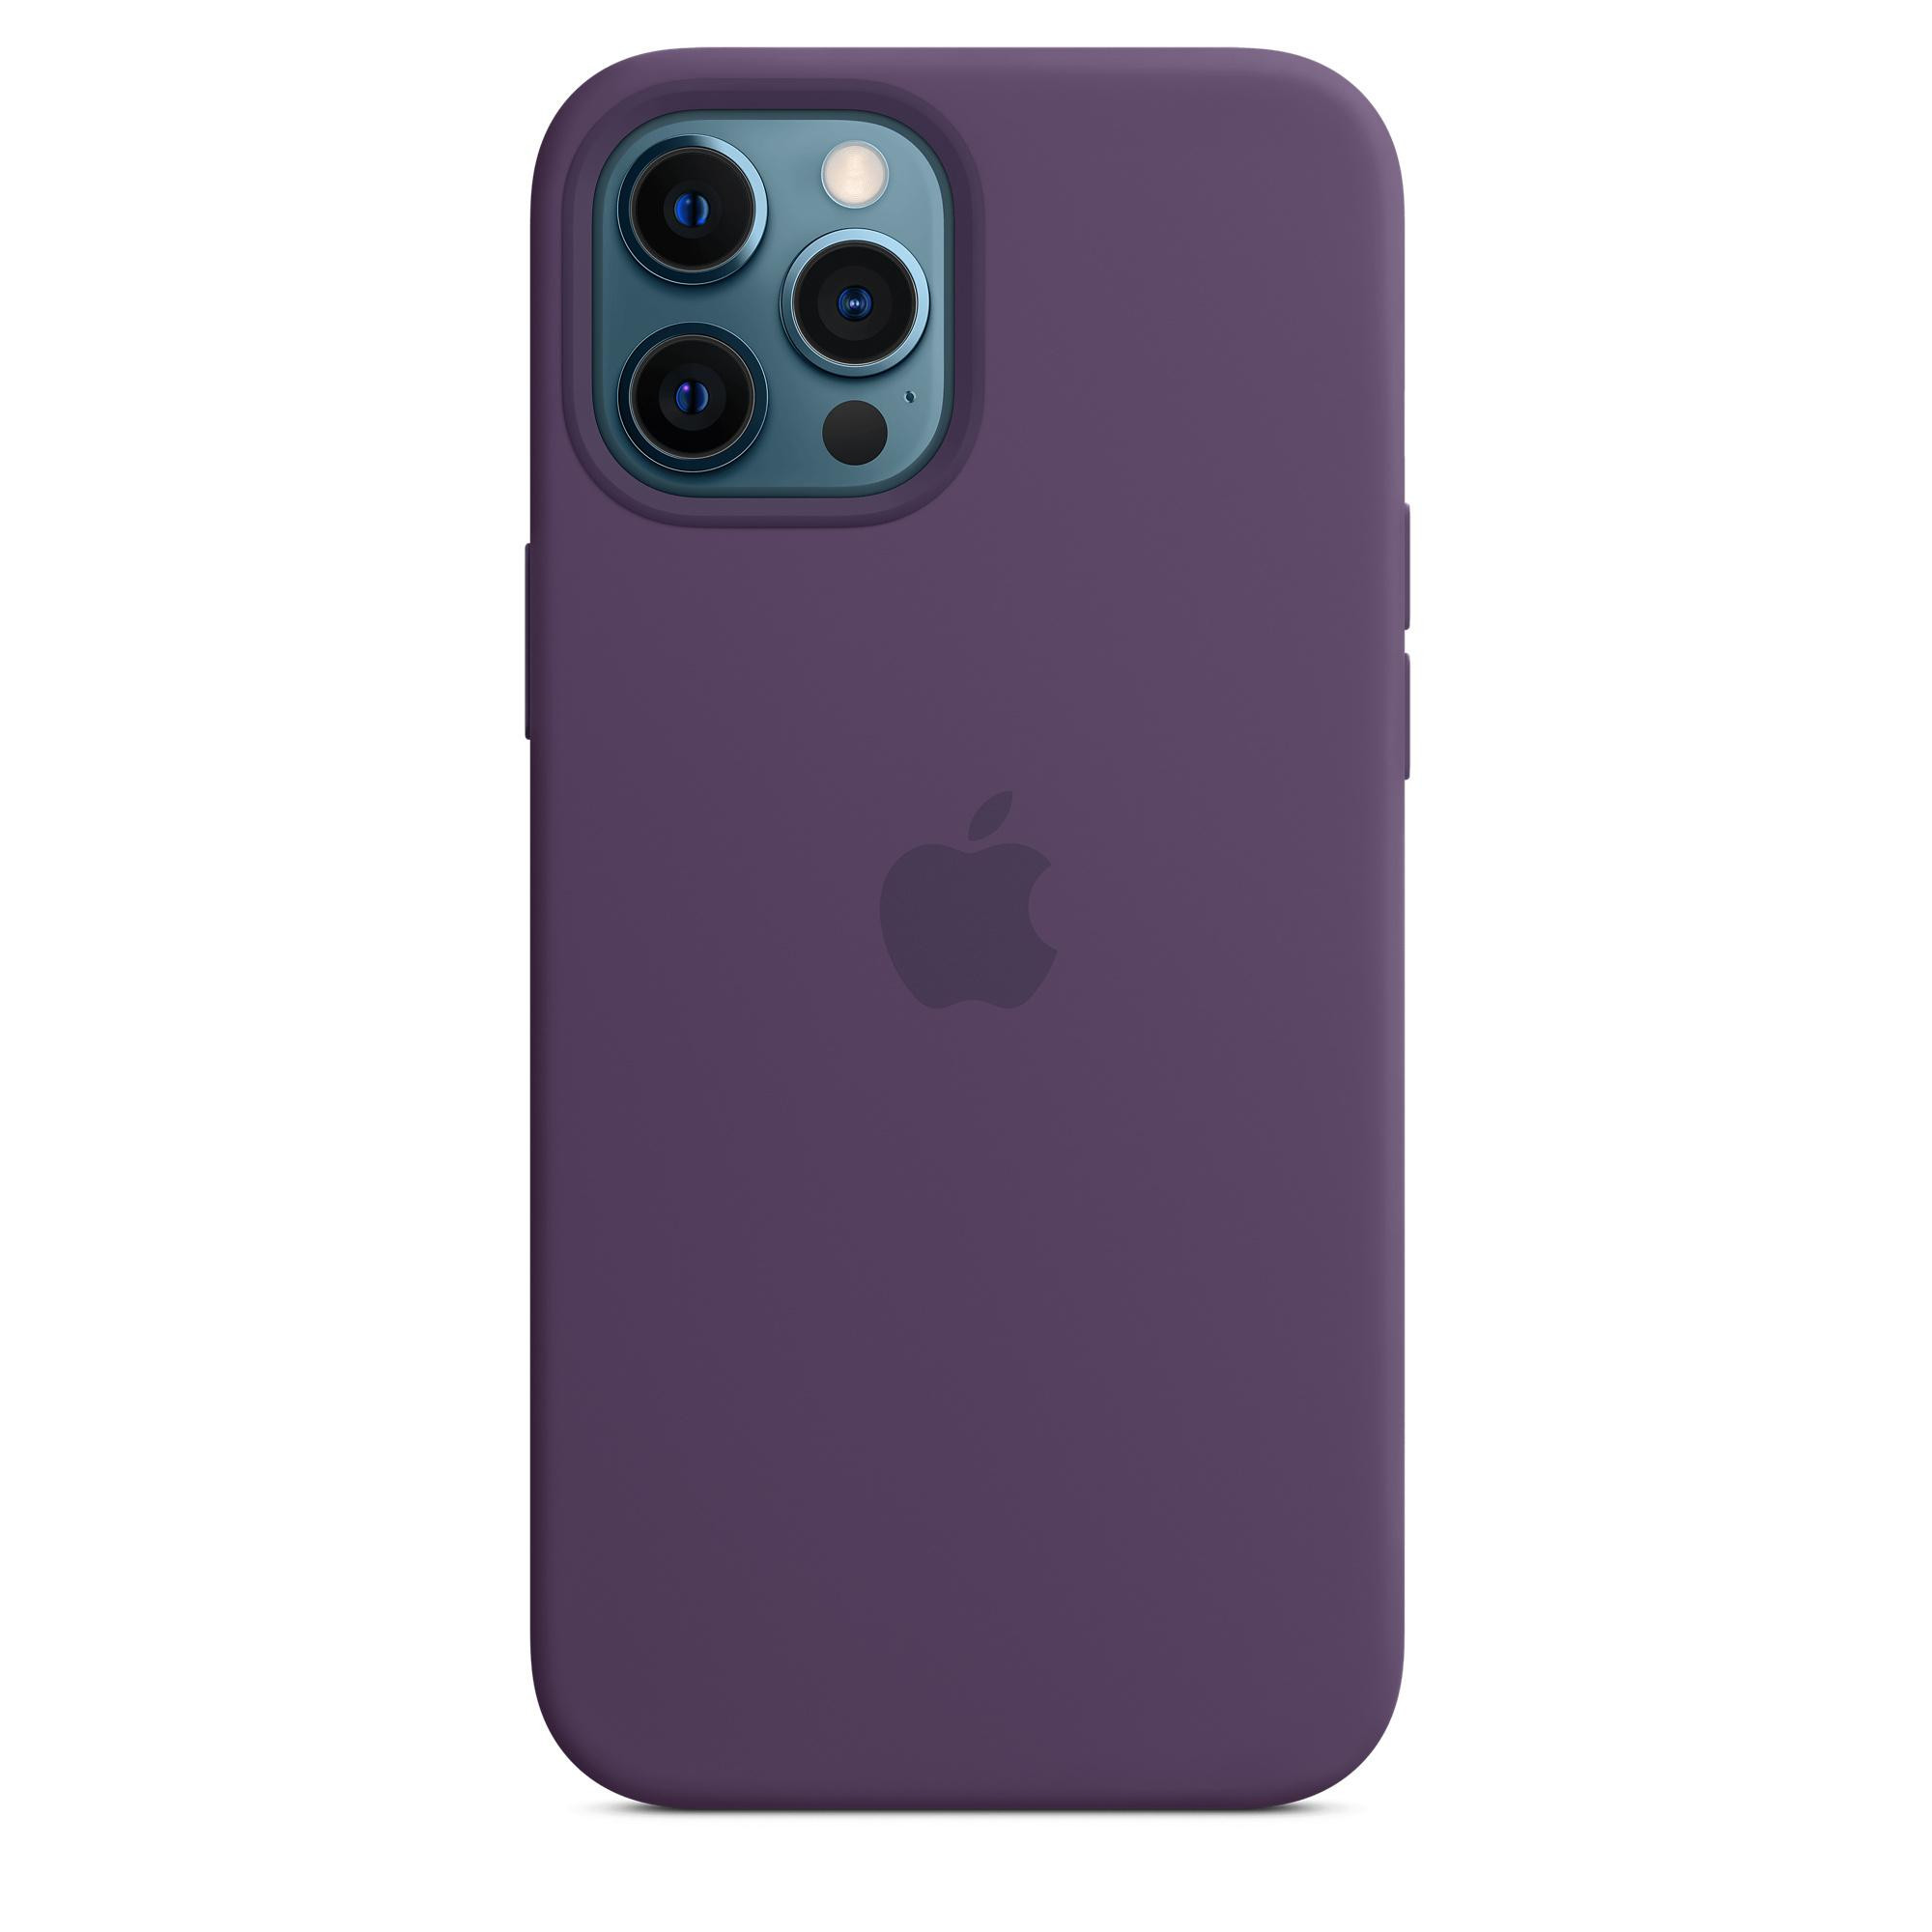 Apple iPhone 12 Pro Max Silicone Case with MagSafe - Amethyst (MK083) - зображення 1